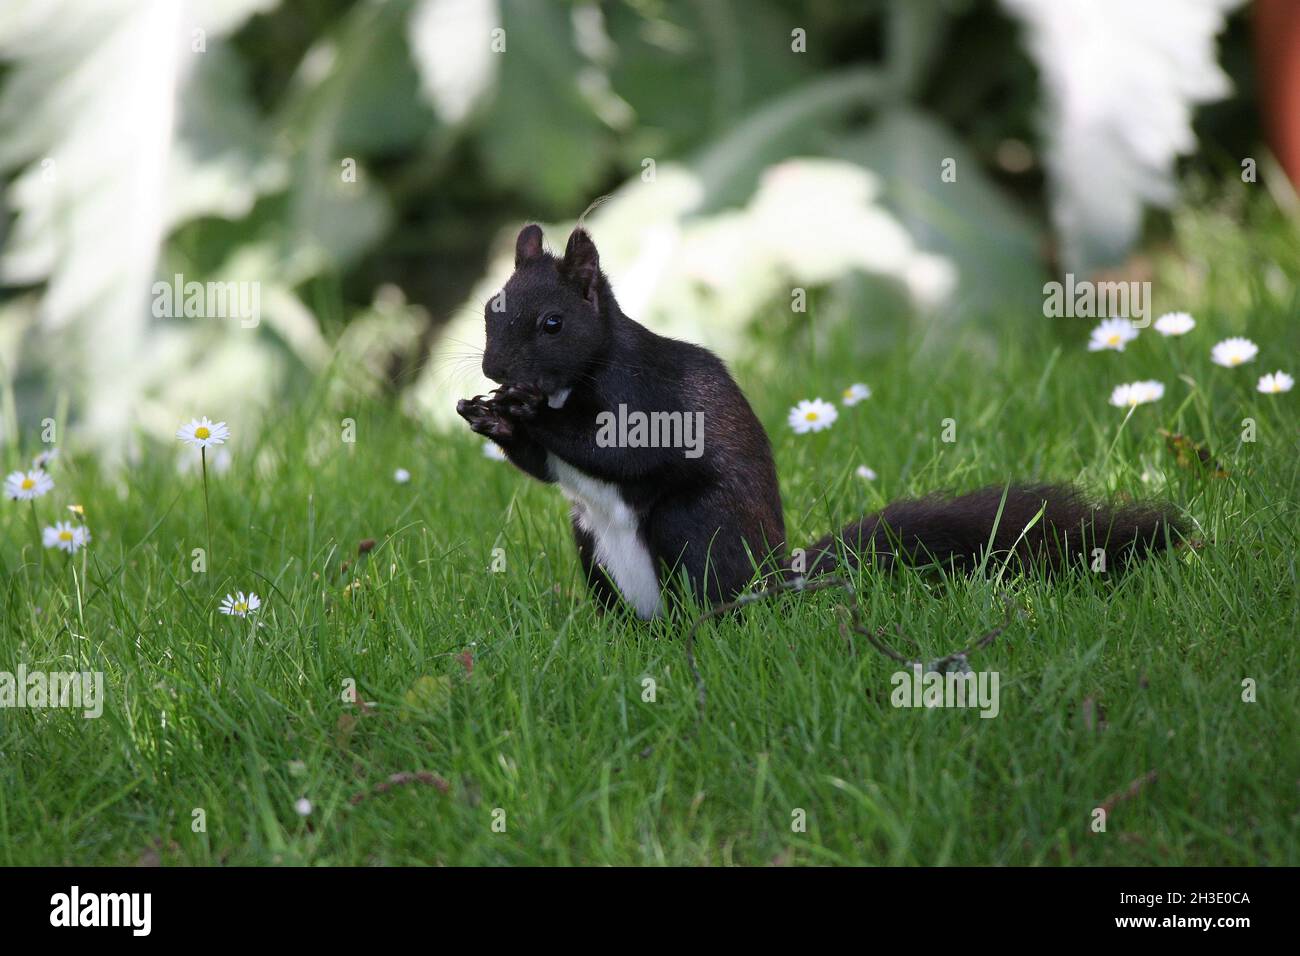 European red squirrel, Eurasian red squirrel (Sciurus vulgaris), Black Squirrel sits in a meadow feeding, Germany Stock Photo